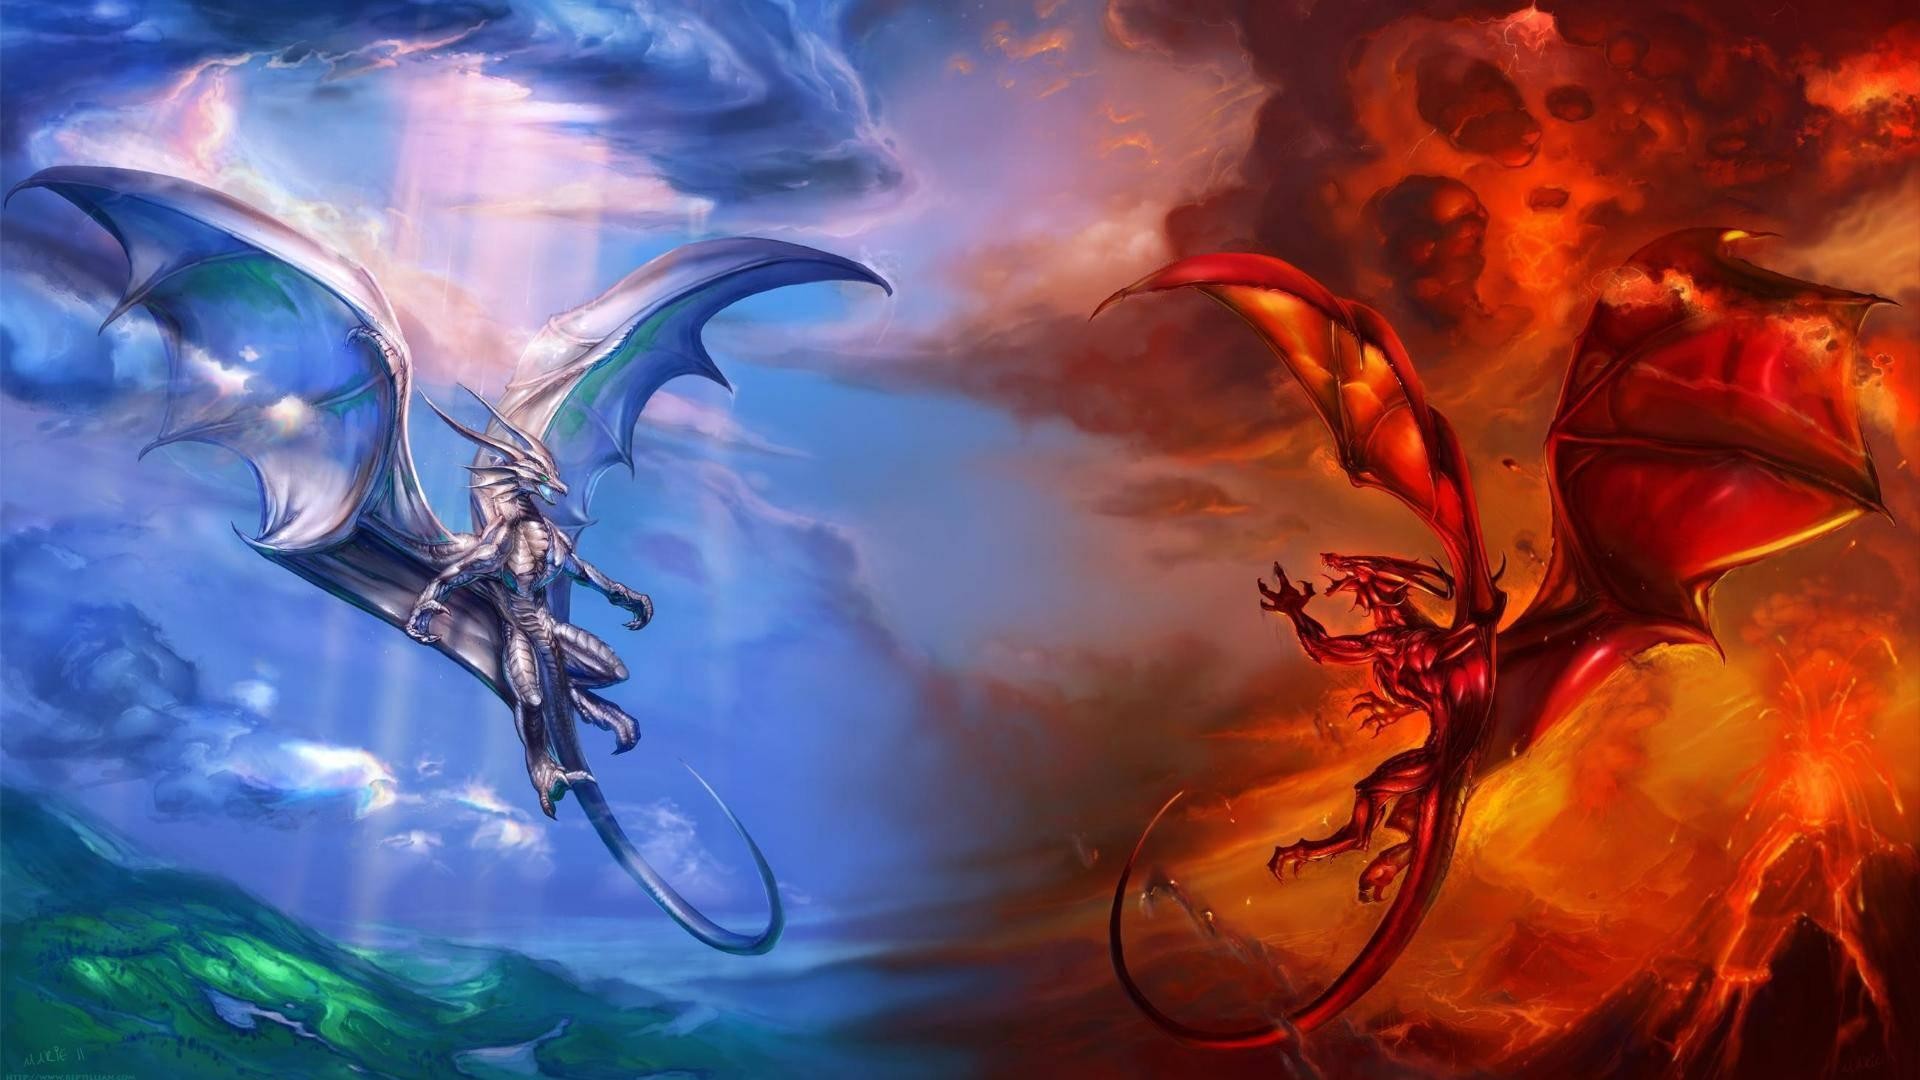 1920x1080 ice dragon vs fire dragon-World of fantasy art design HD wallpaper  Wallpapers View